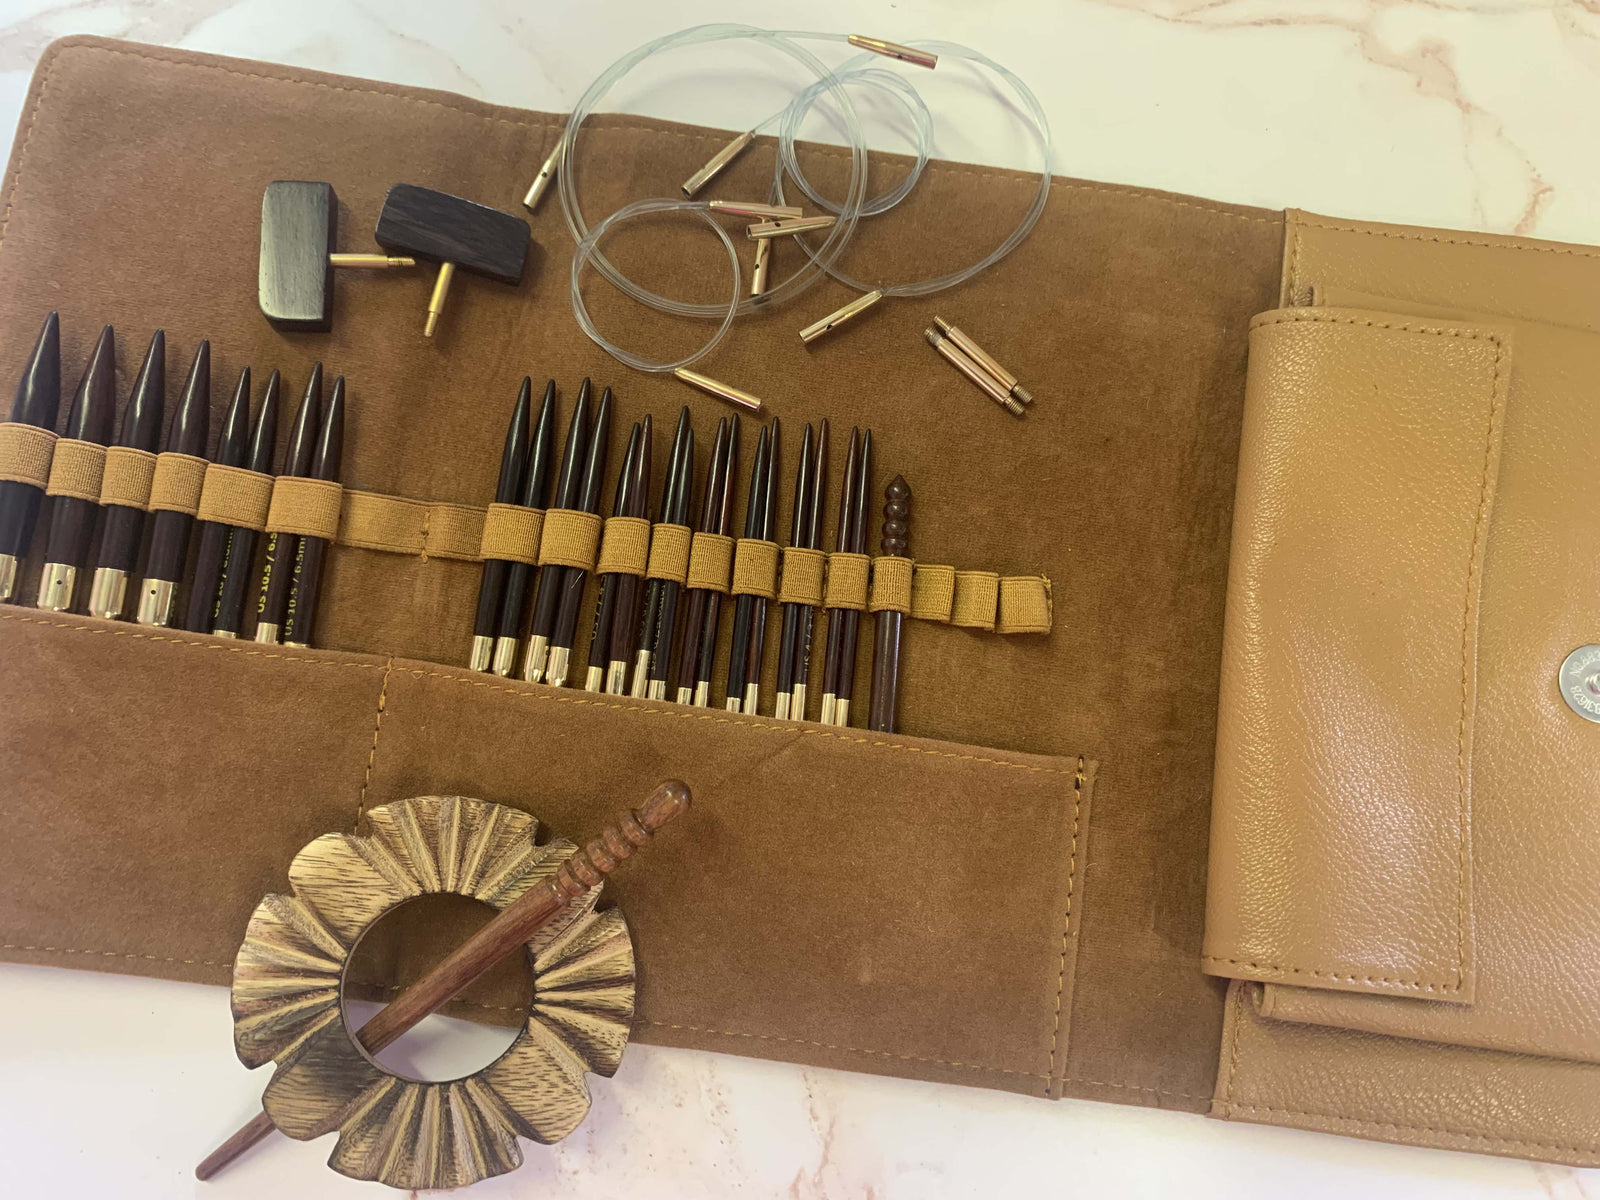 Premium 5 inch Rosewood Interchangeable Circular Knitting Needle Set | Leather Case (29 Piece Set)